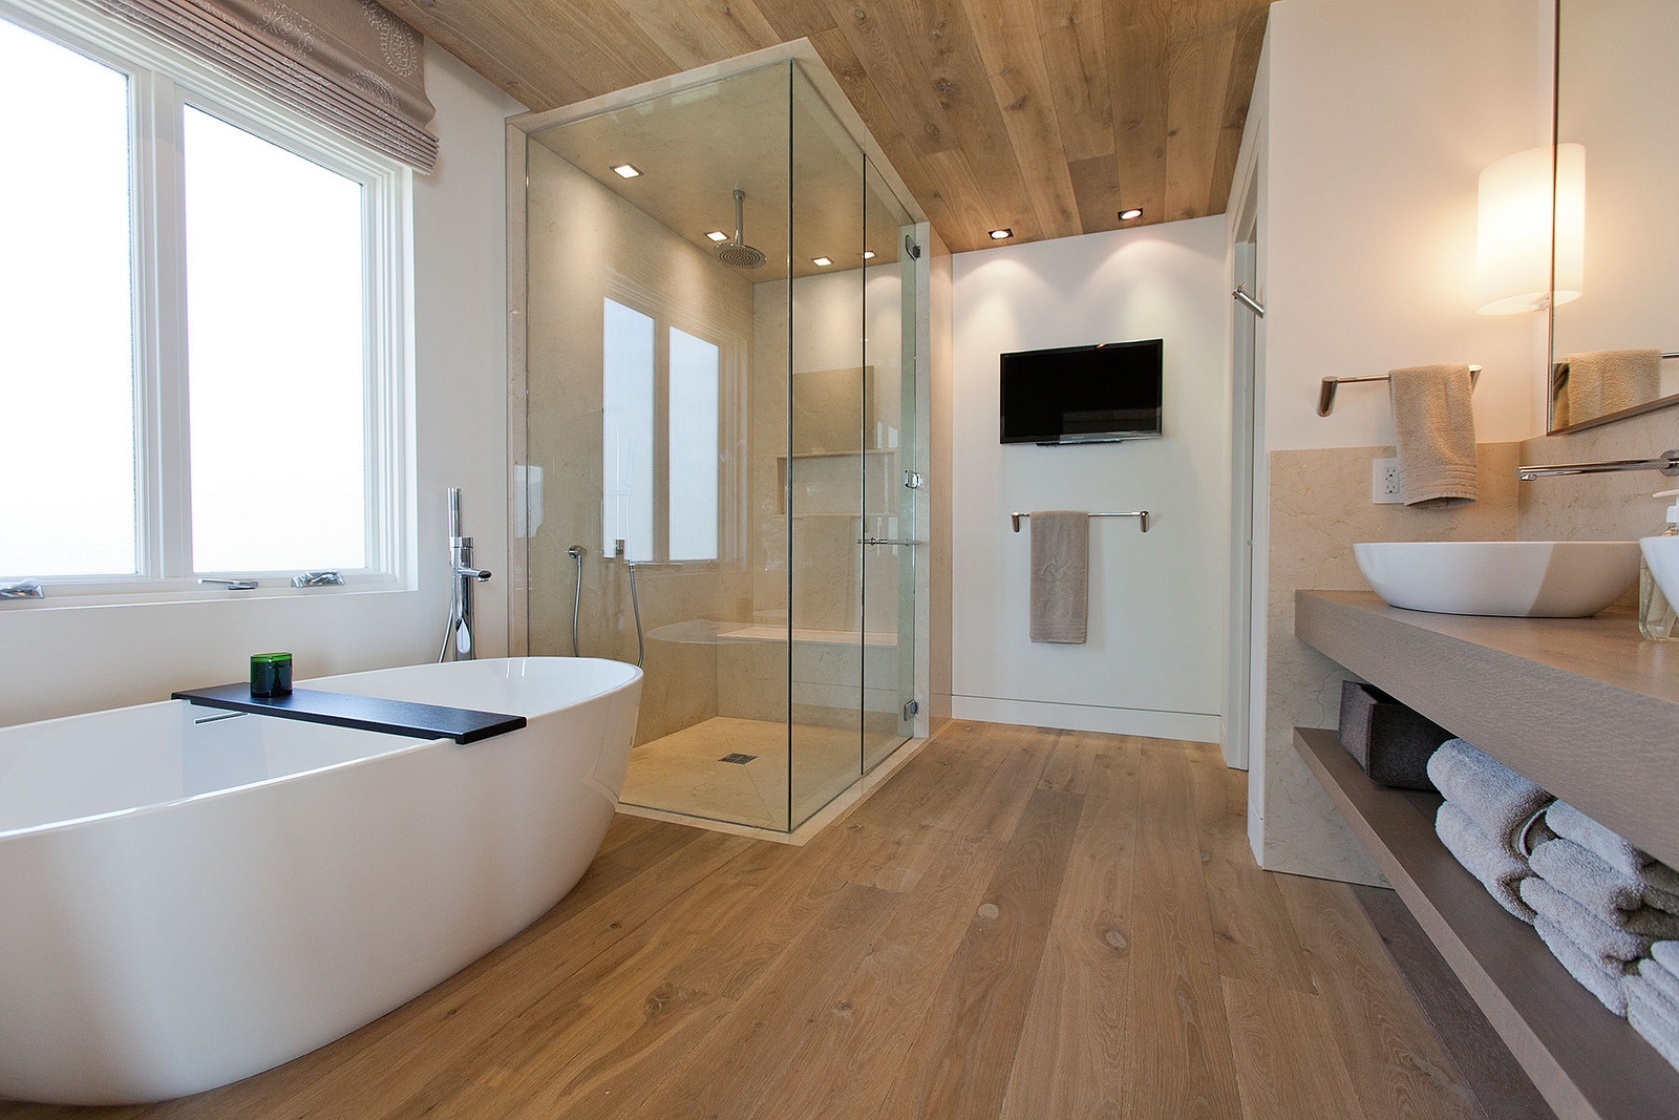 Large bathroom design - 5 Bathroom Designs Style Guide 2016